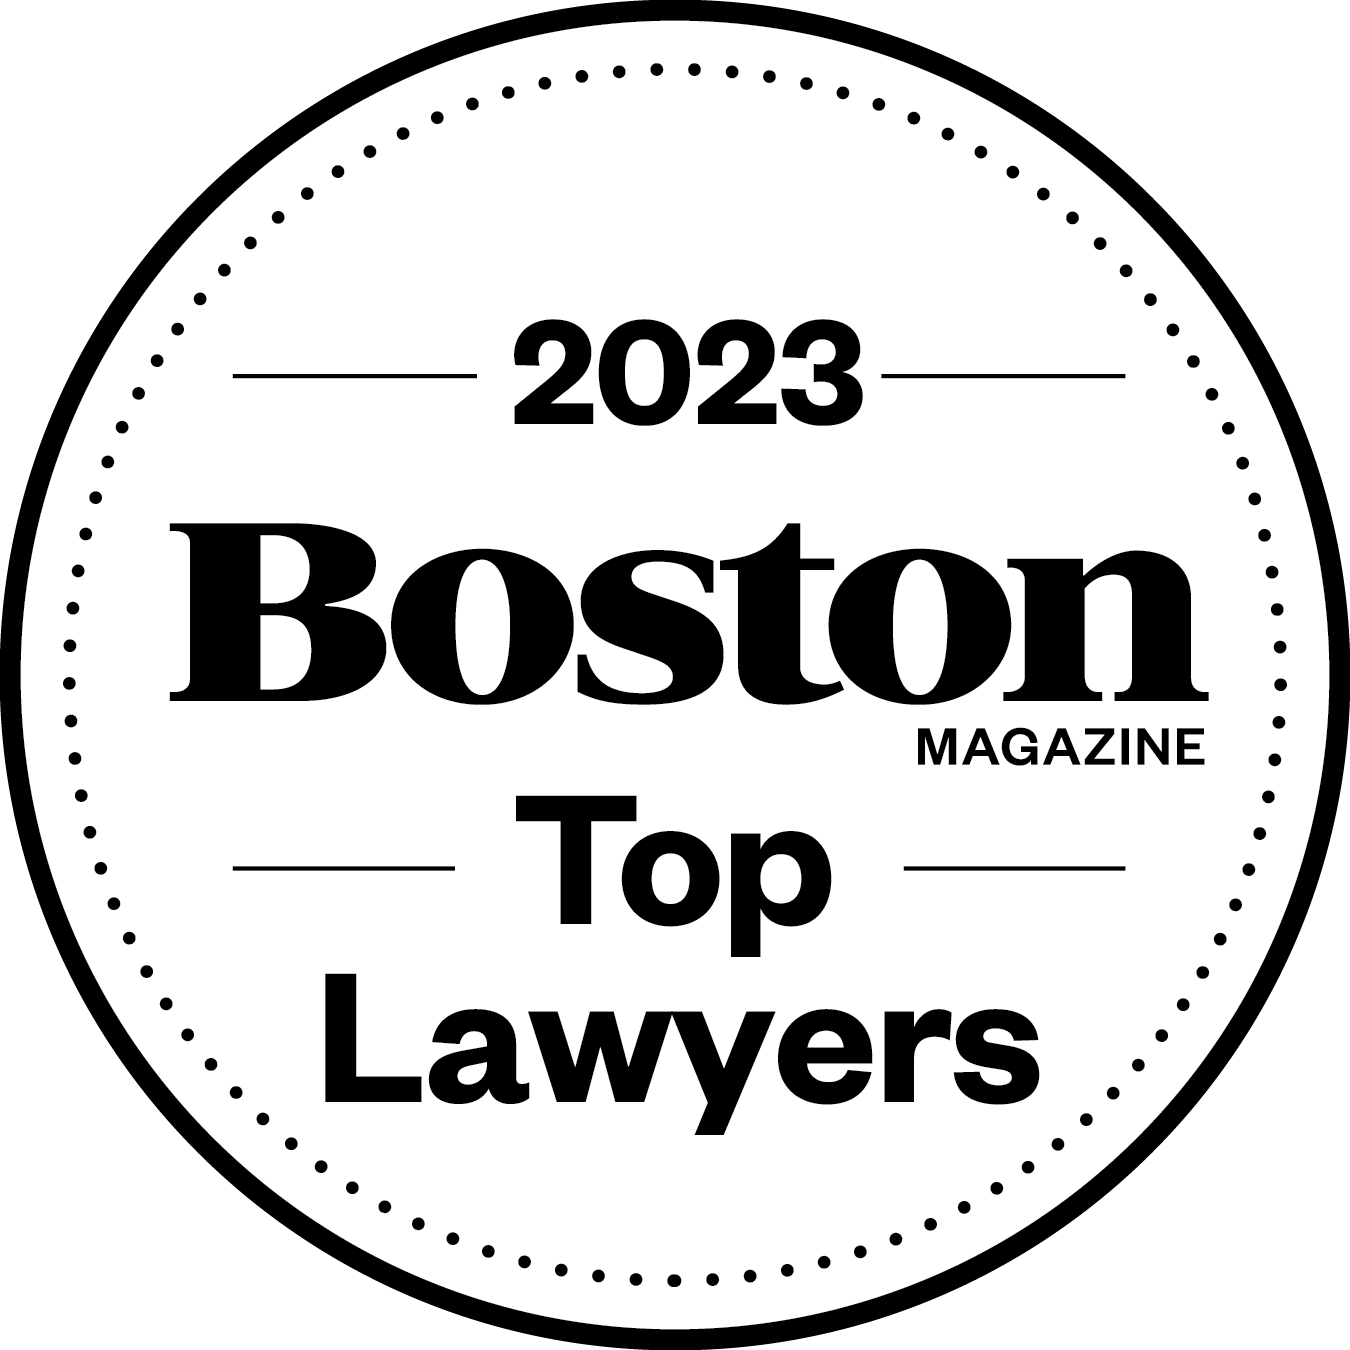 Boston Magazine Top Lawyer for 2023